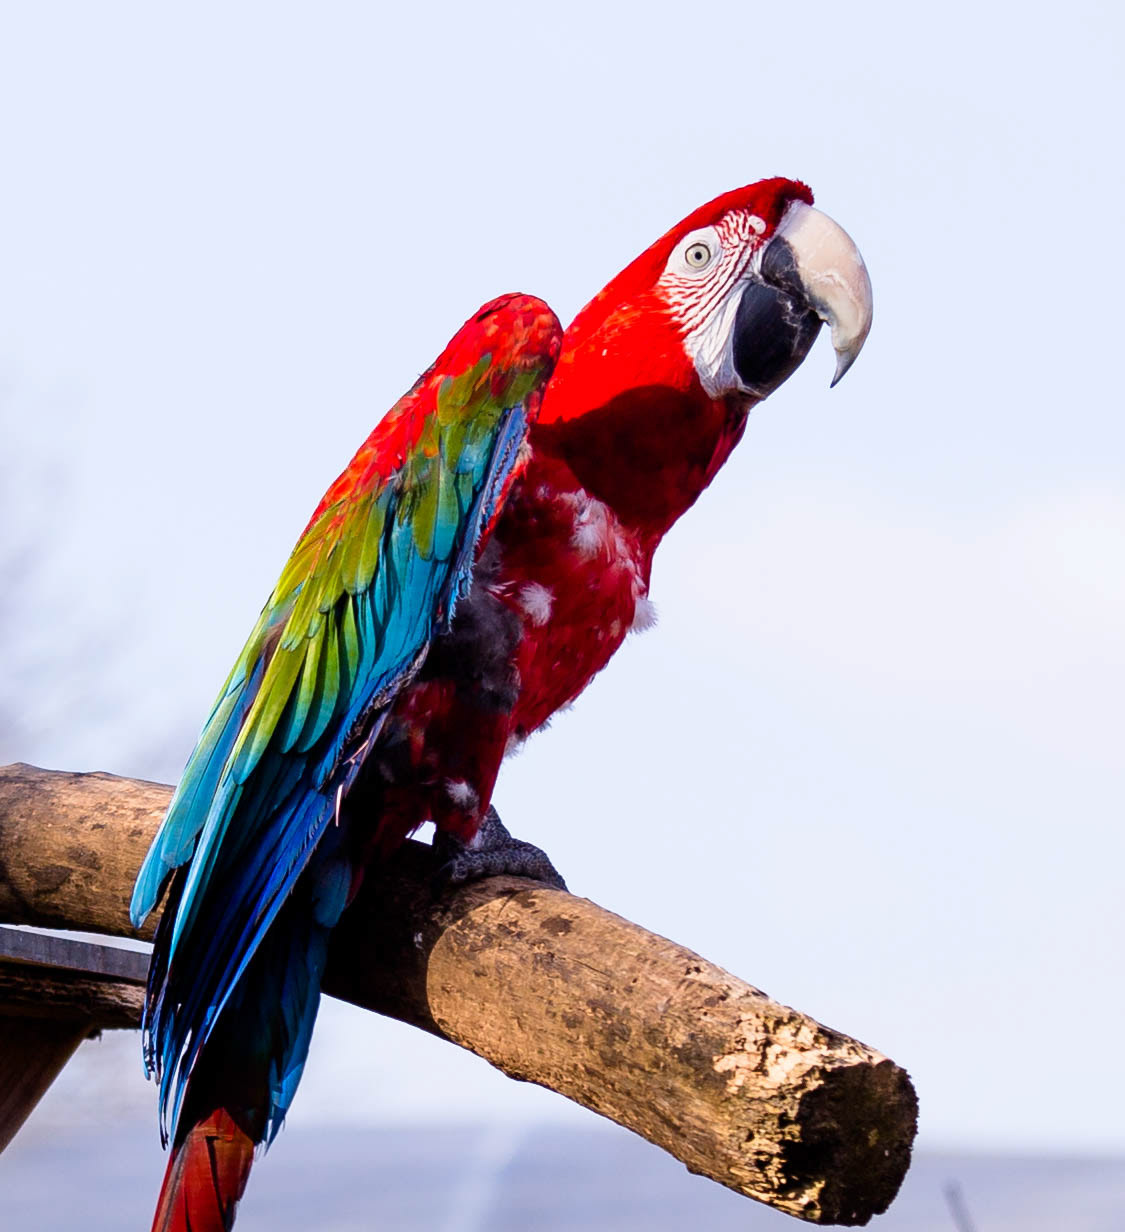 exoticzoo Telford zoo animals femalephotographer parrot rescueanimals